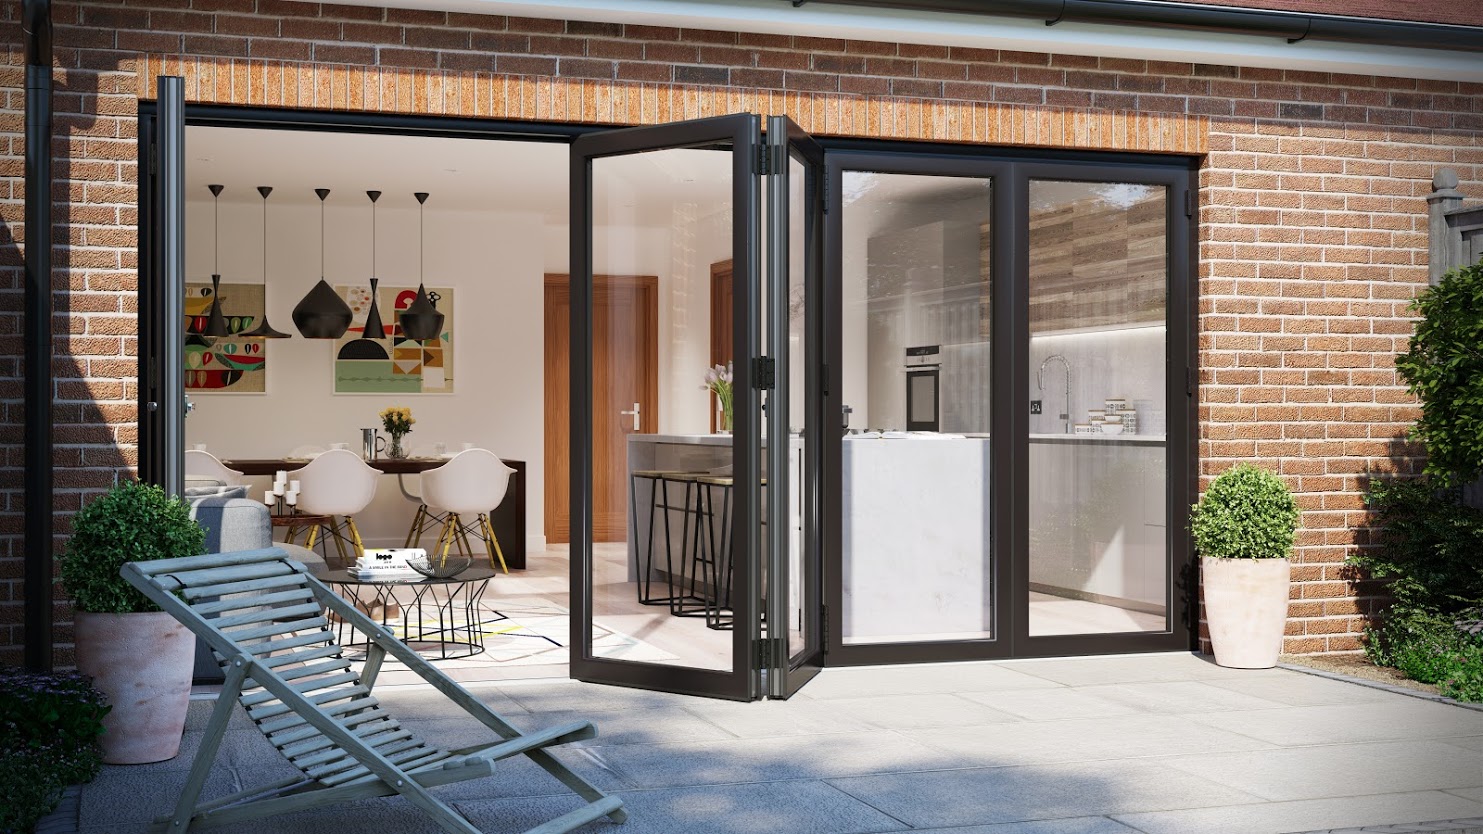 Seamless Indoor-Outdoor Transition Between Living Spaces